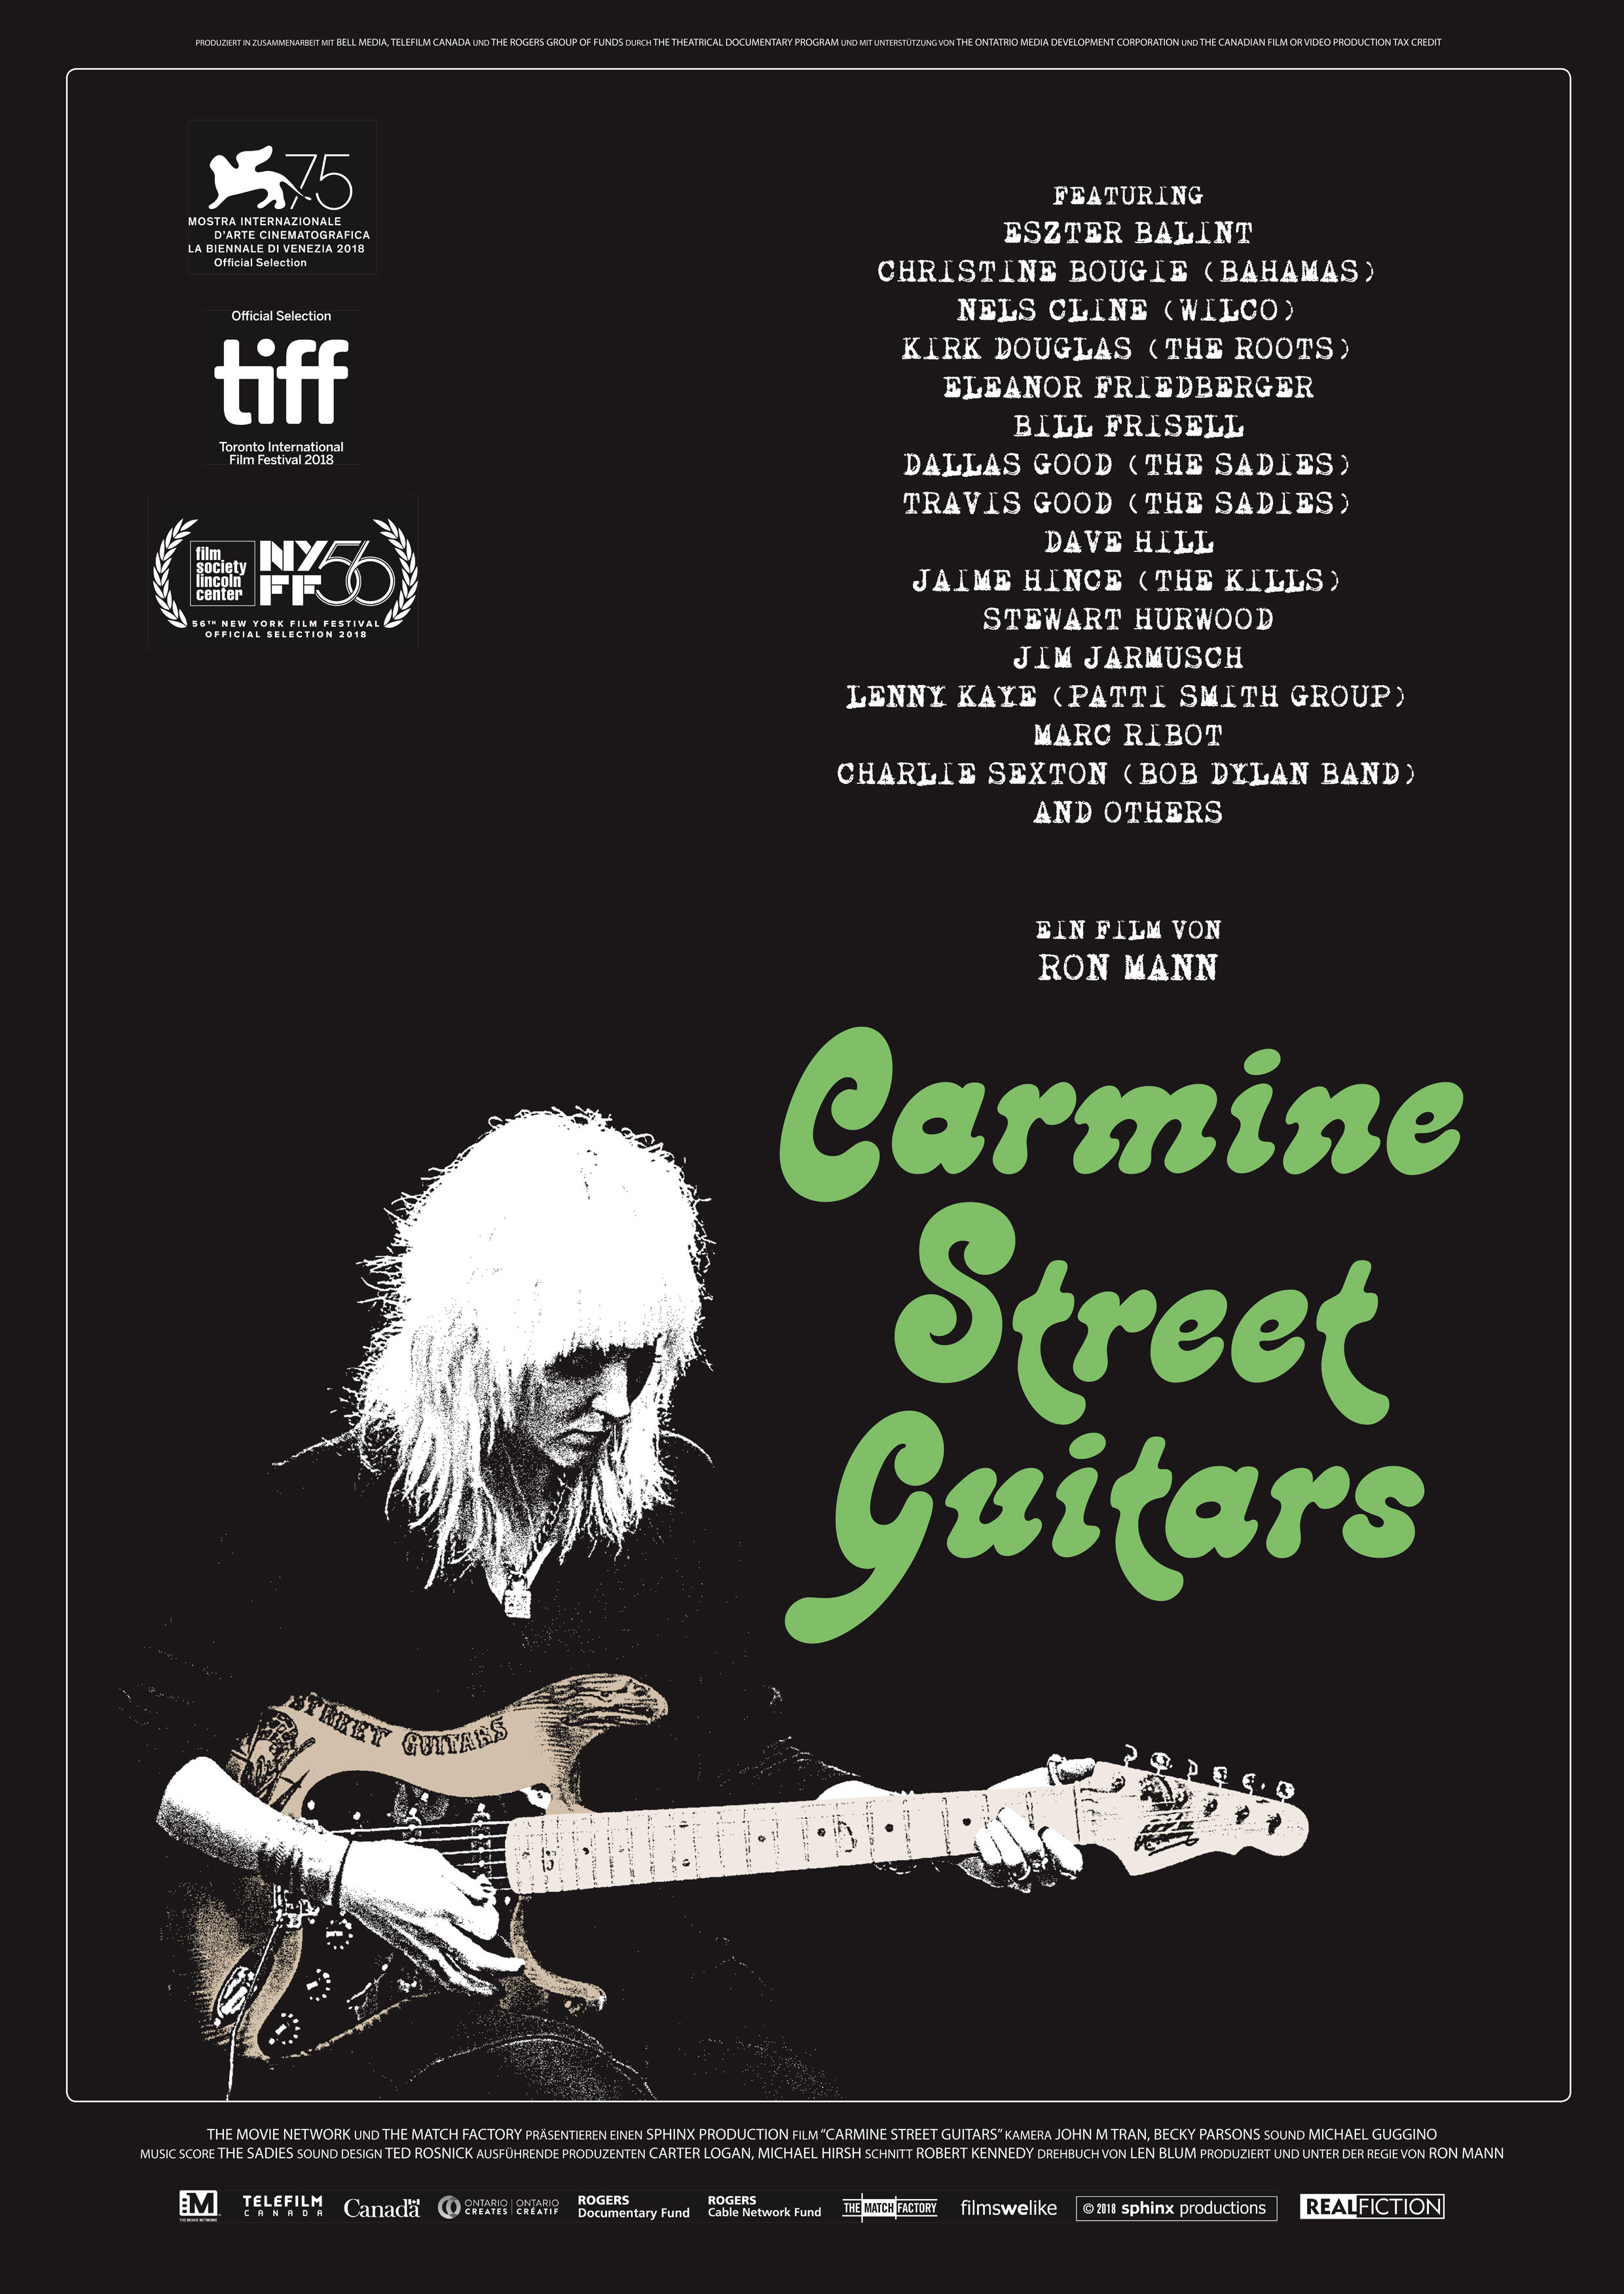 Nonton film Carmine Street Guitars layarkaca21 indoxx1 ganool online streaming terbaru